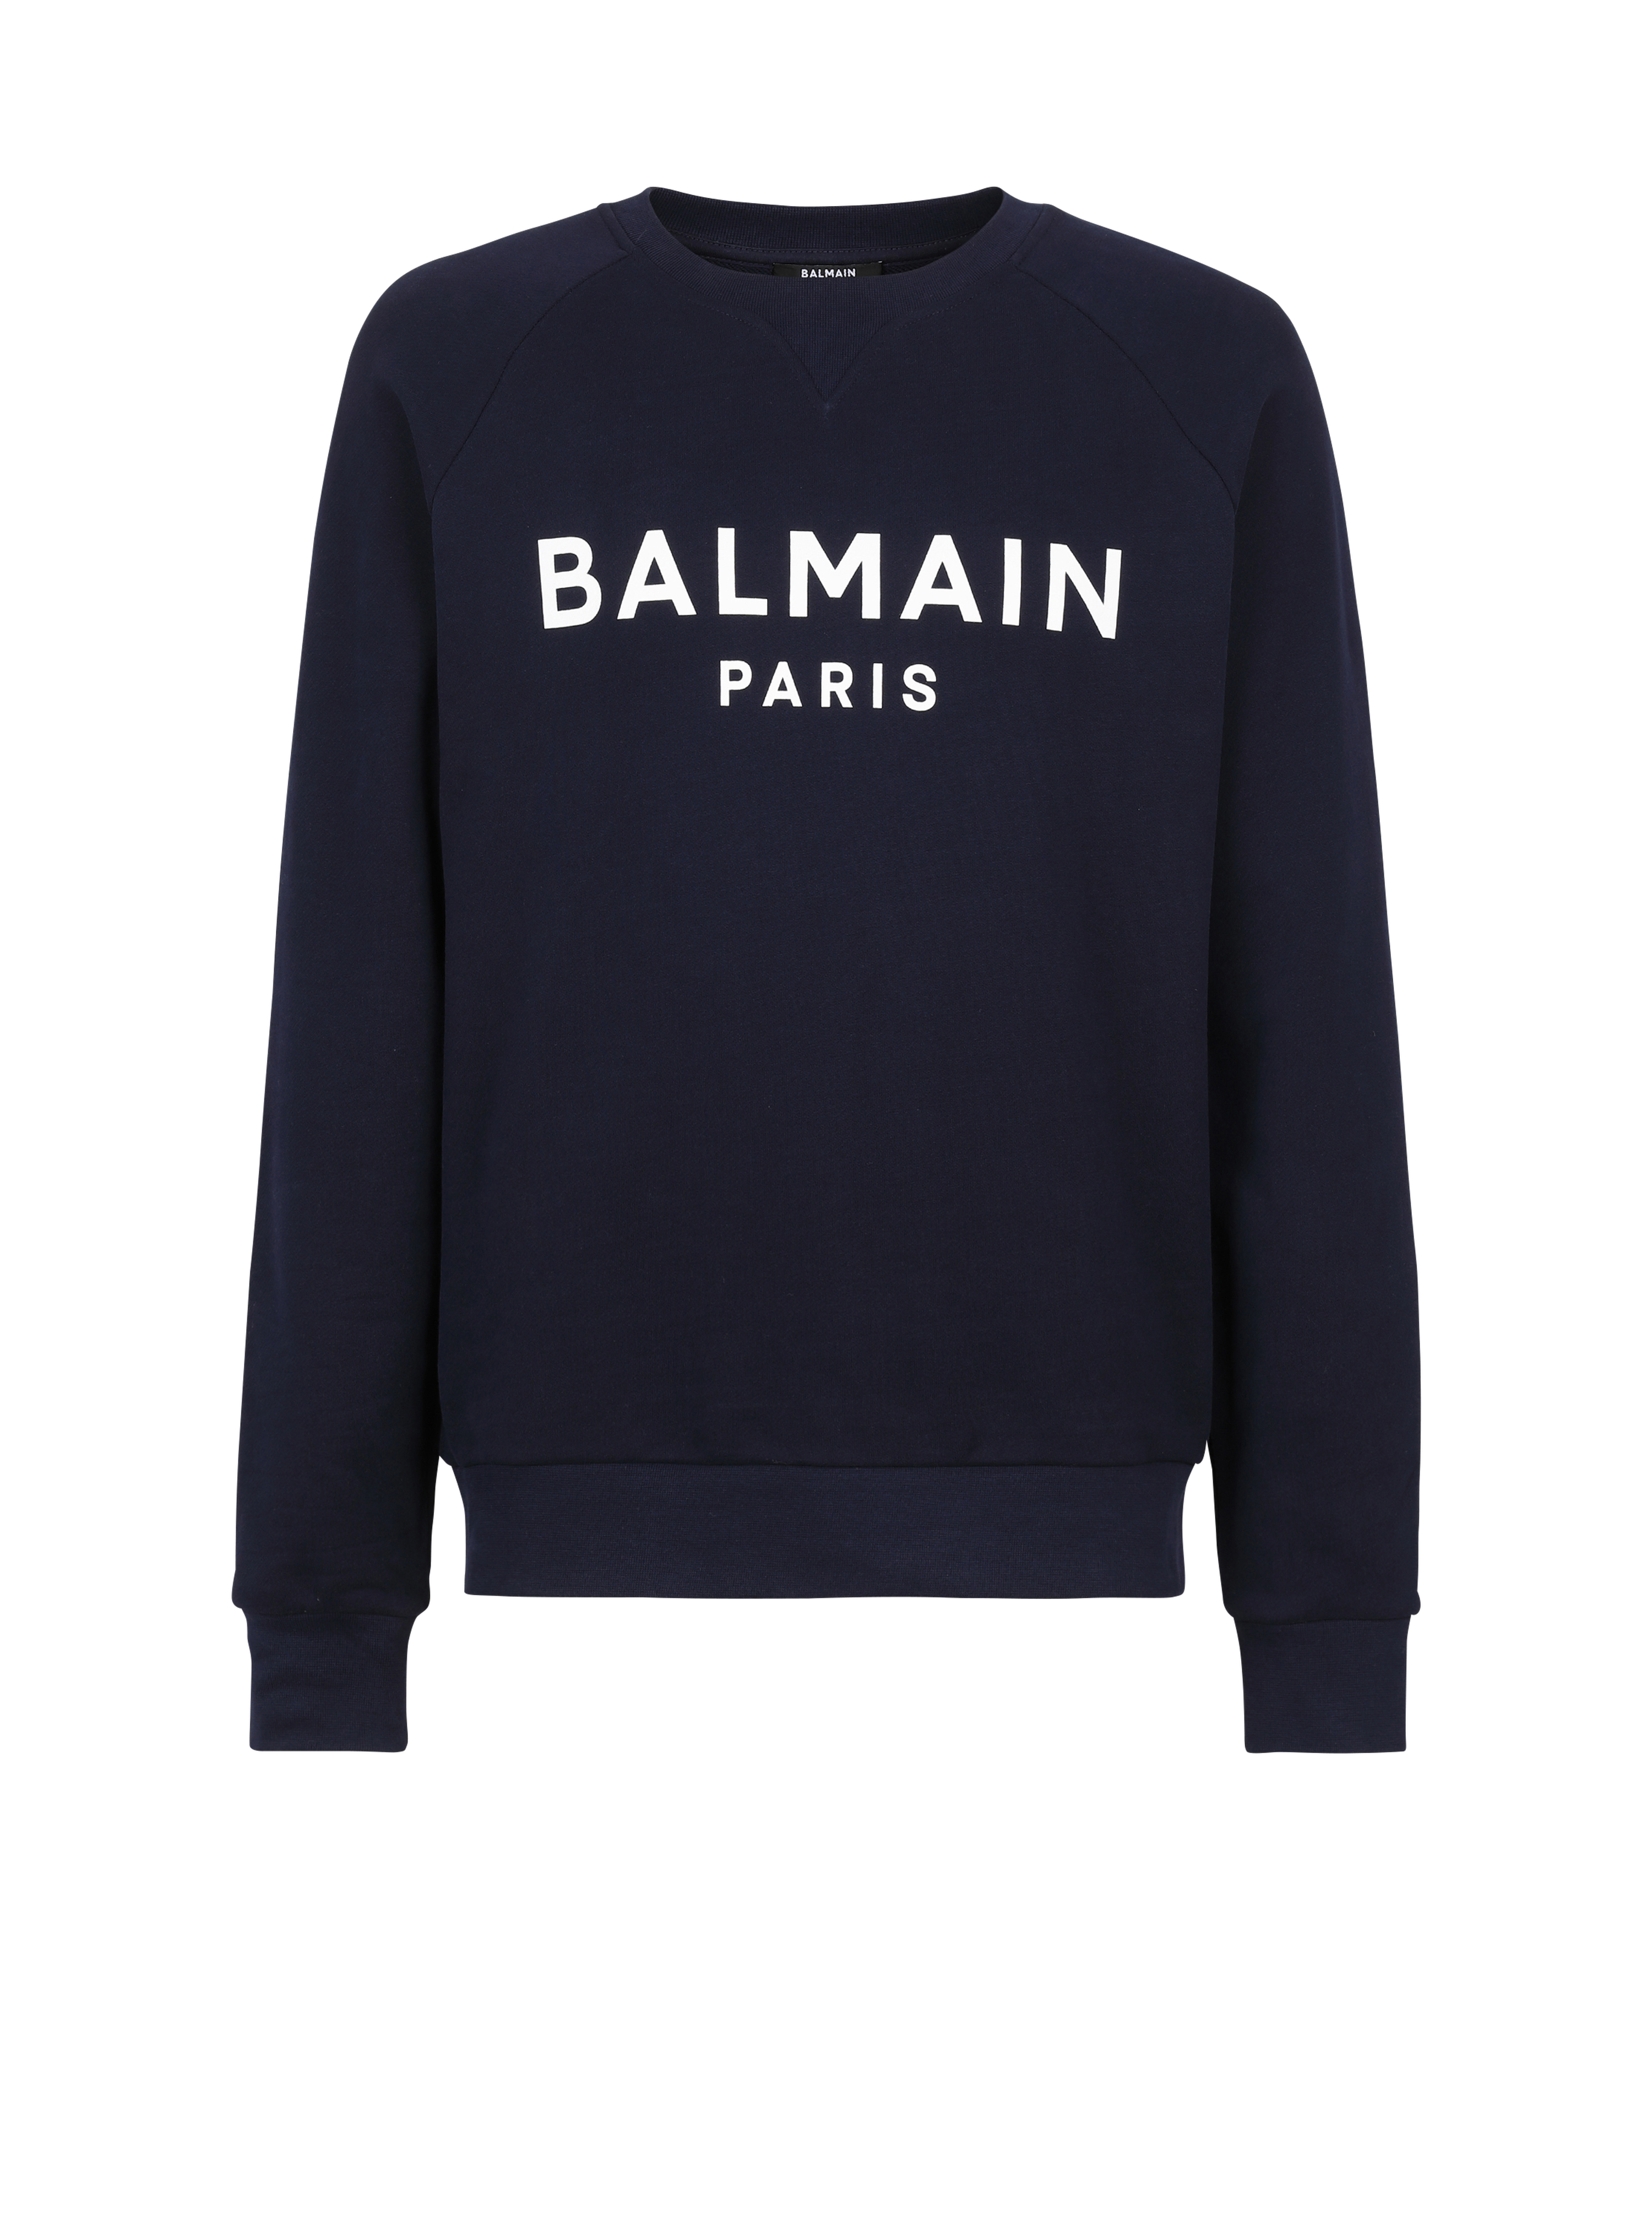 Sweat en coton floqué logo Balmain Paris, bleu marine